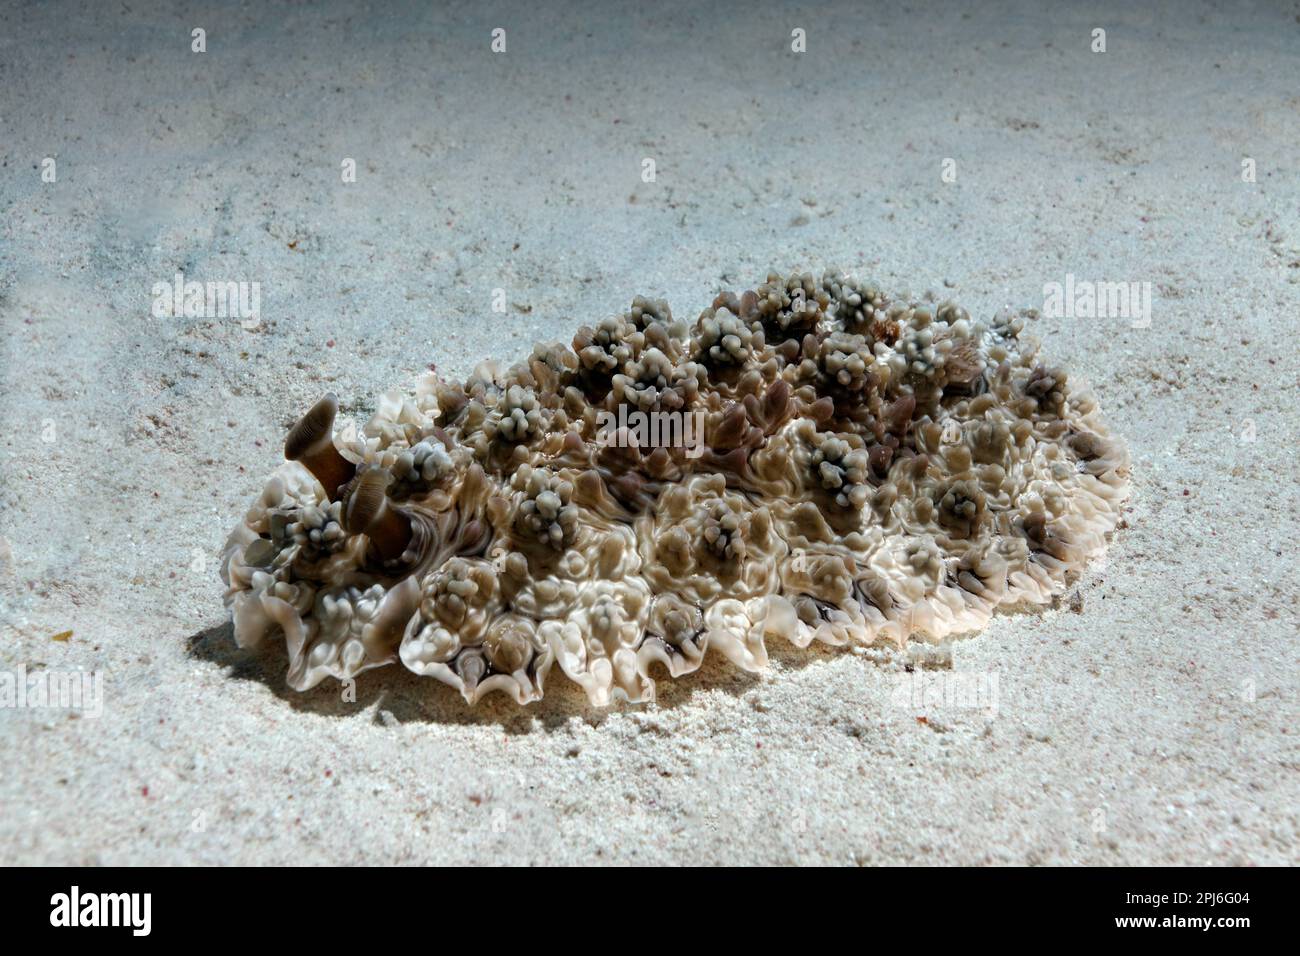 Cauliflower nudibranch (Dendrodoris tuberculosa) crawling over sandy bottom, Red Sea, St. Johns, Marsa Alam, Egypt Stock Photo